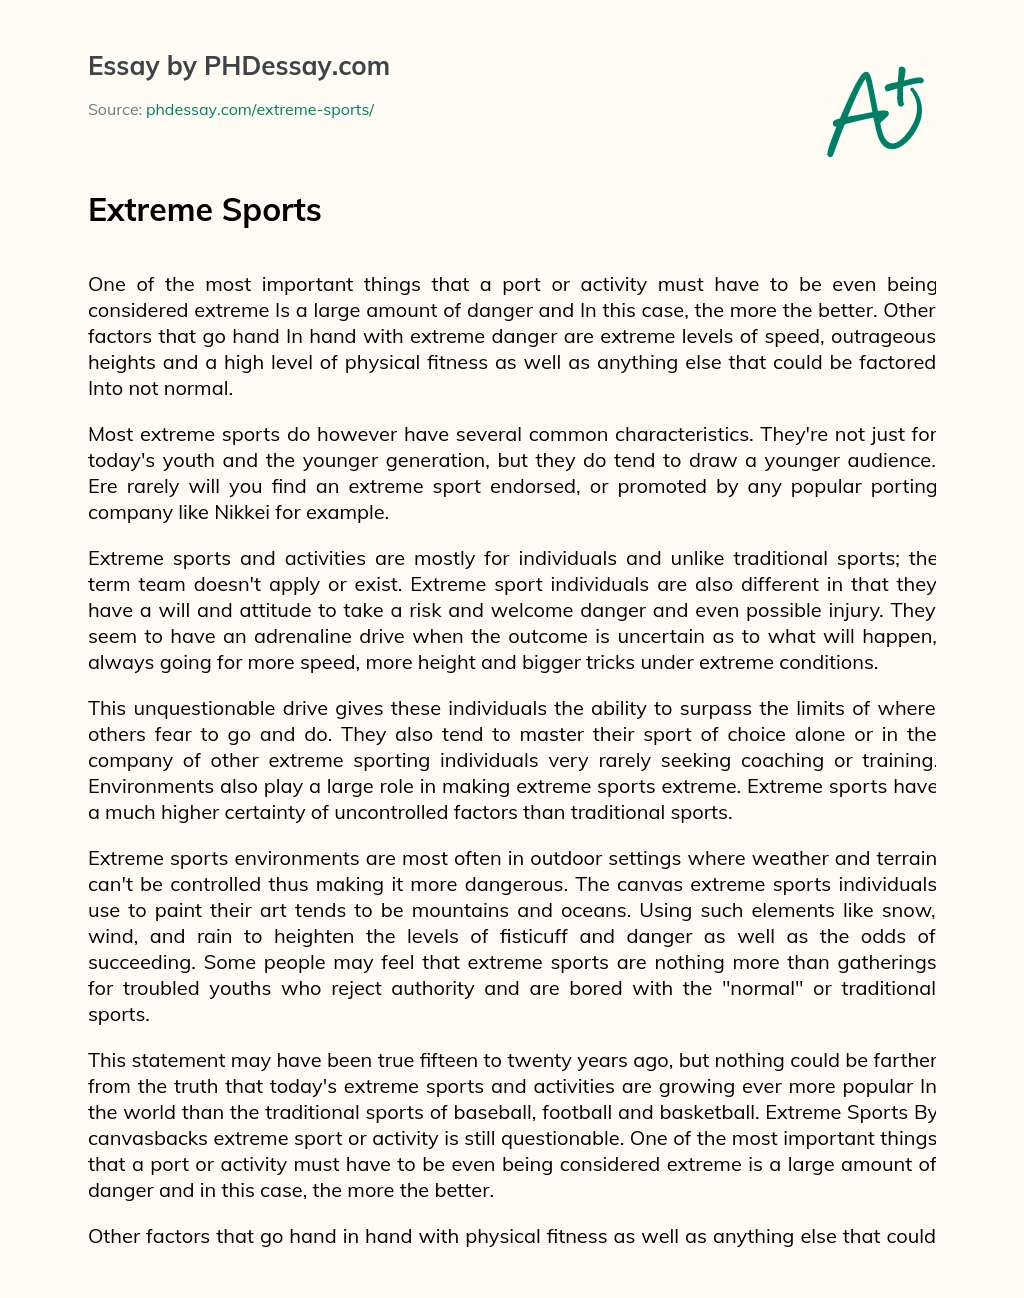 Extreme Sports essay